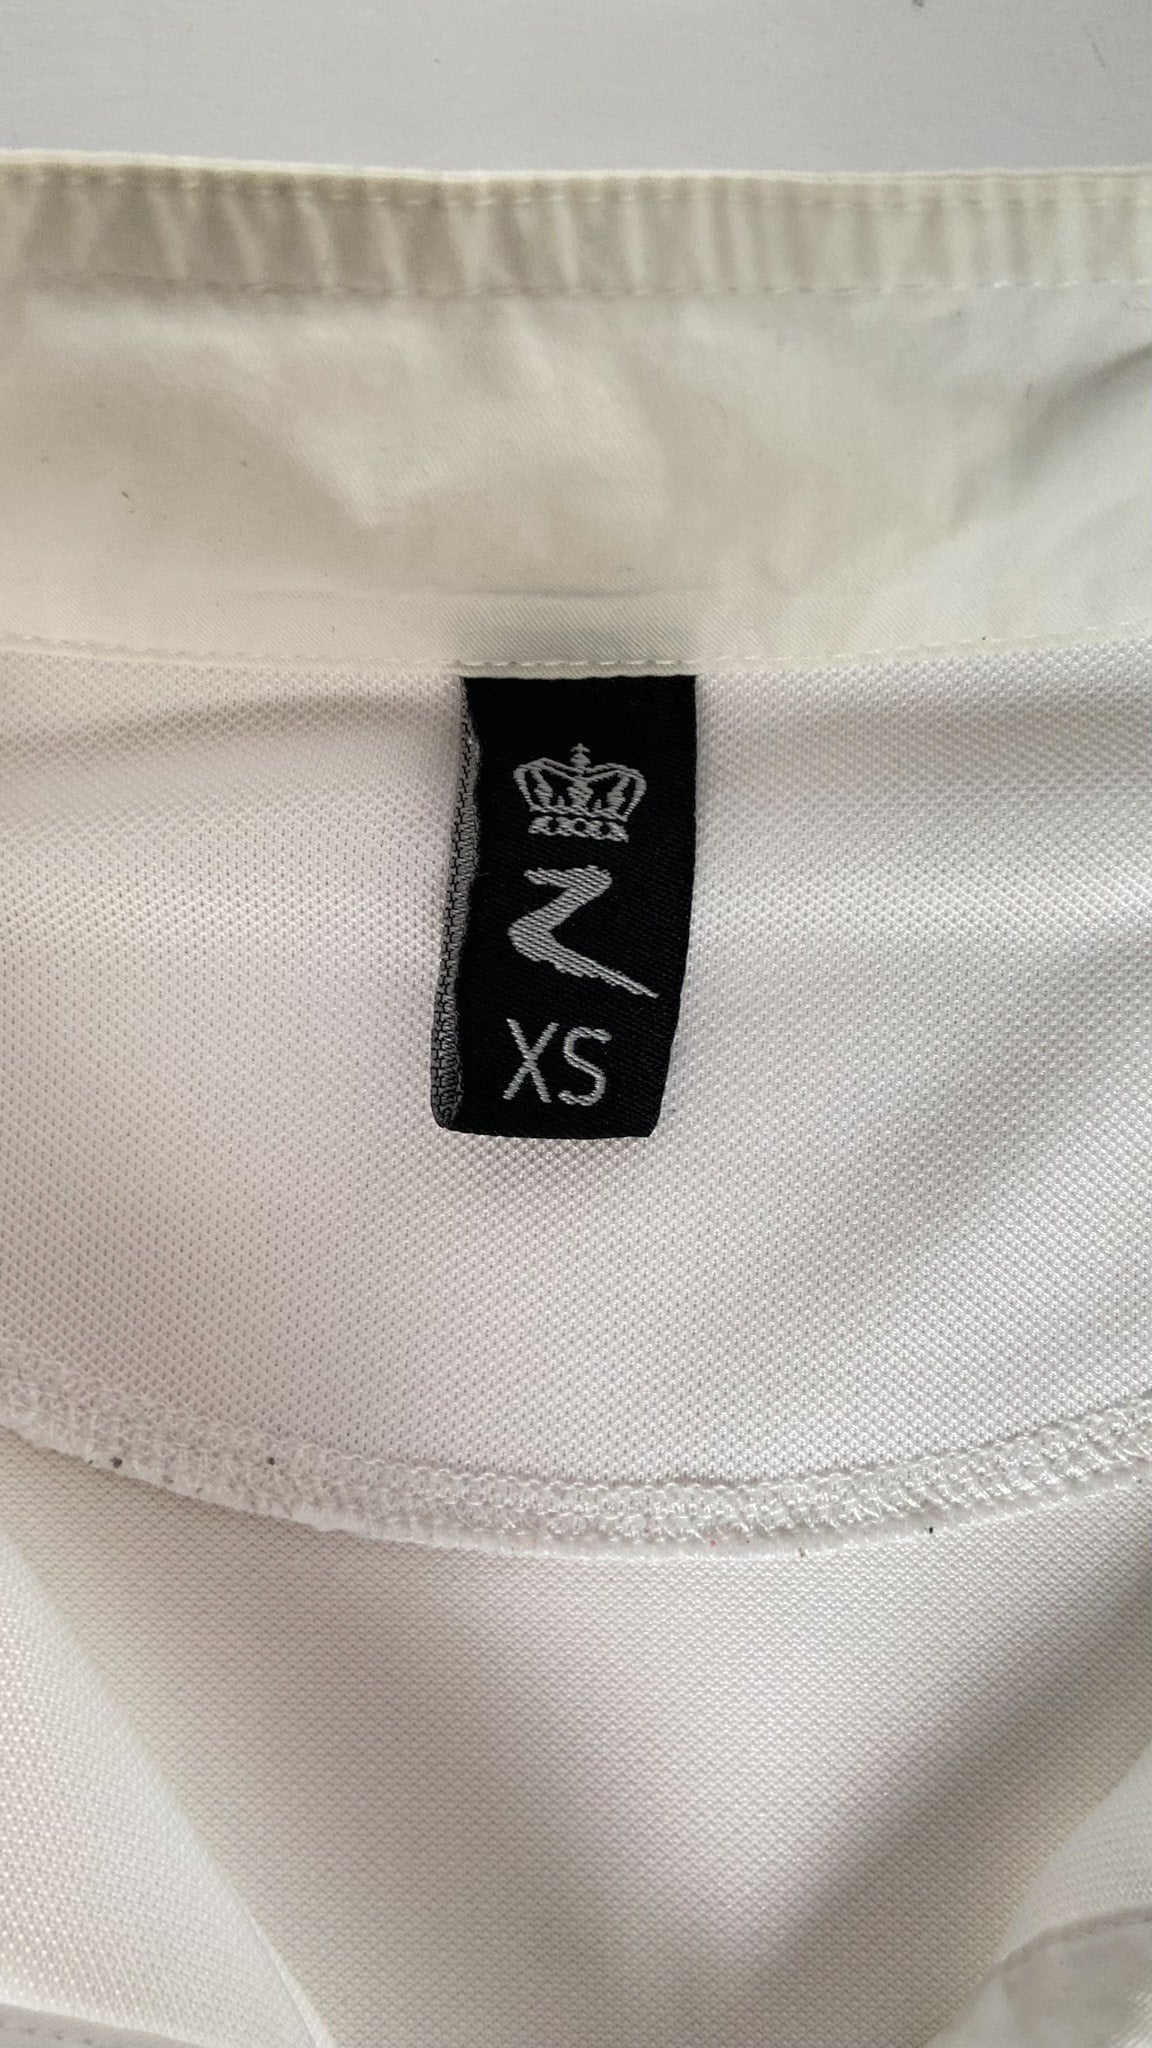 Horze Short Sleeve Competition Shirt - White - Women's XS